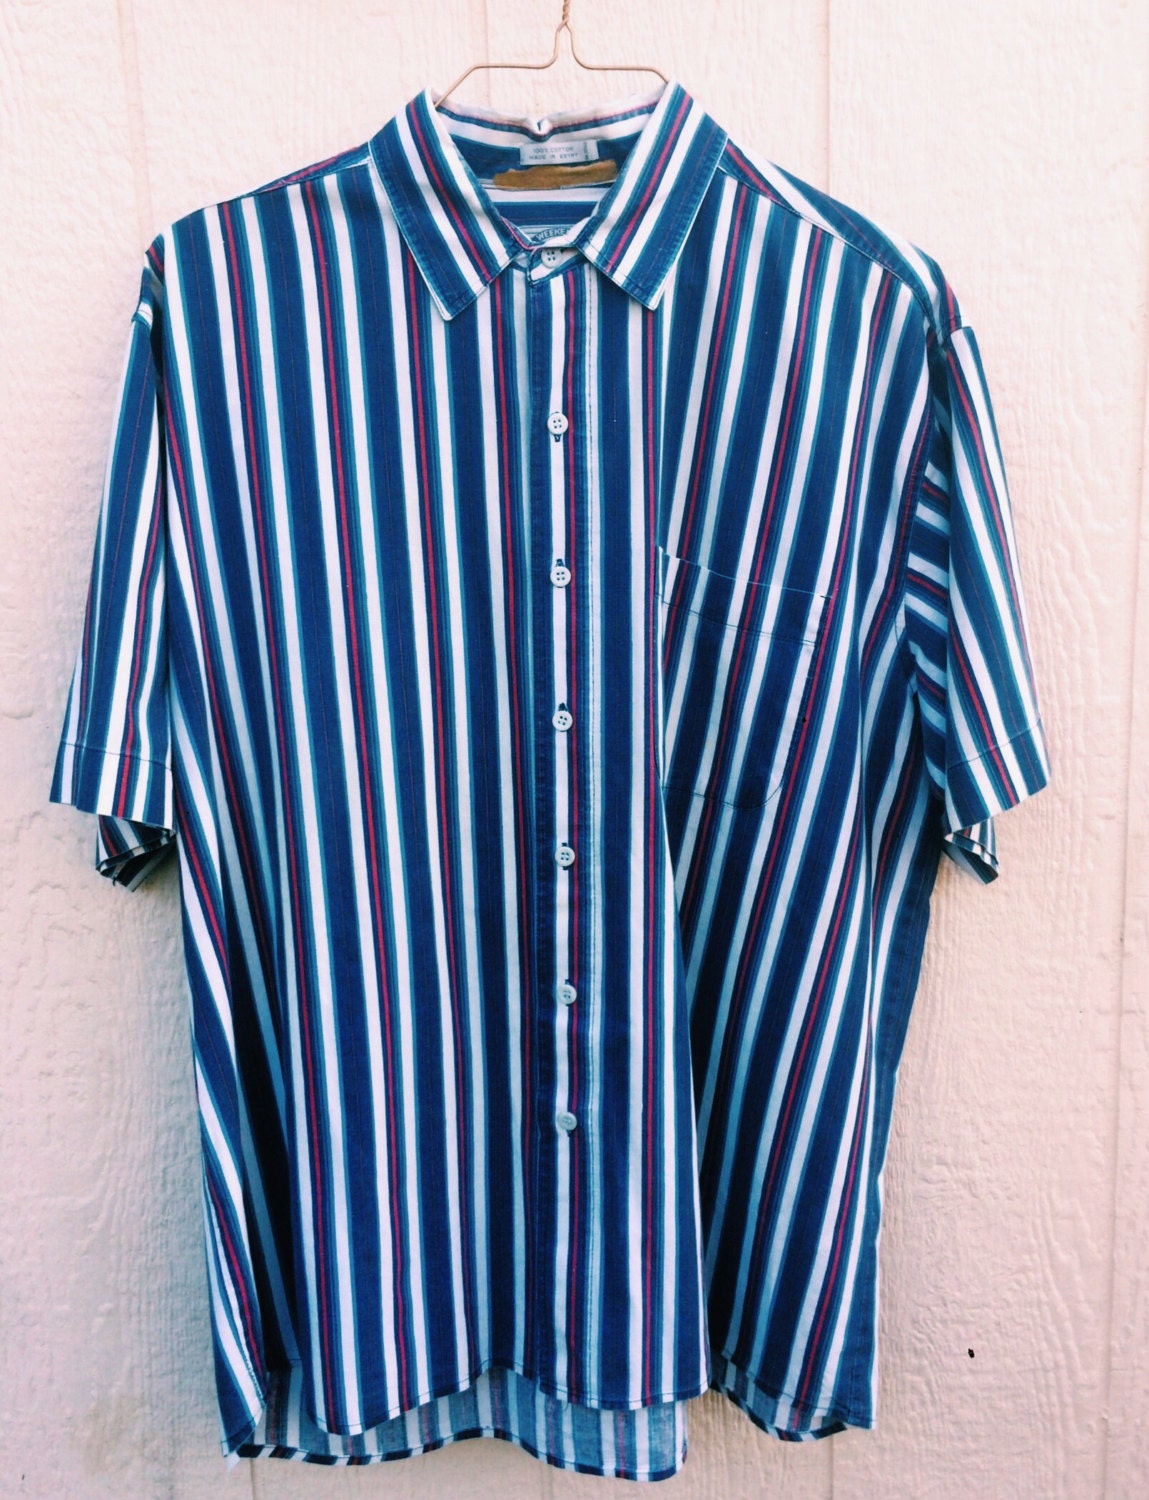 90's Nautical Striped Button Down Shirt